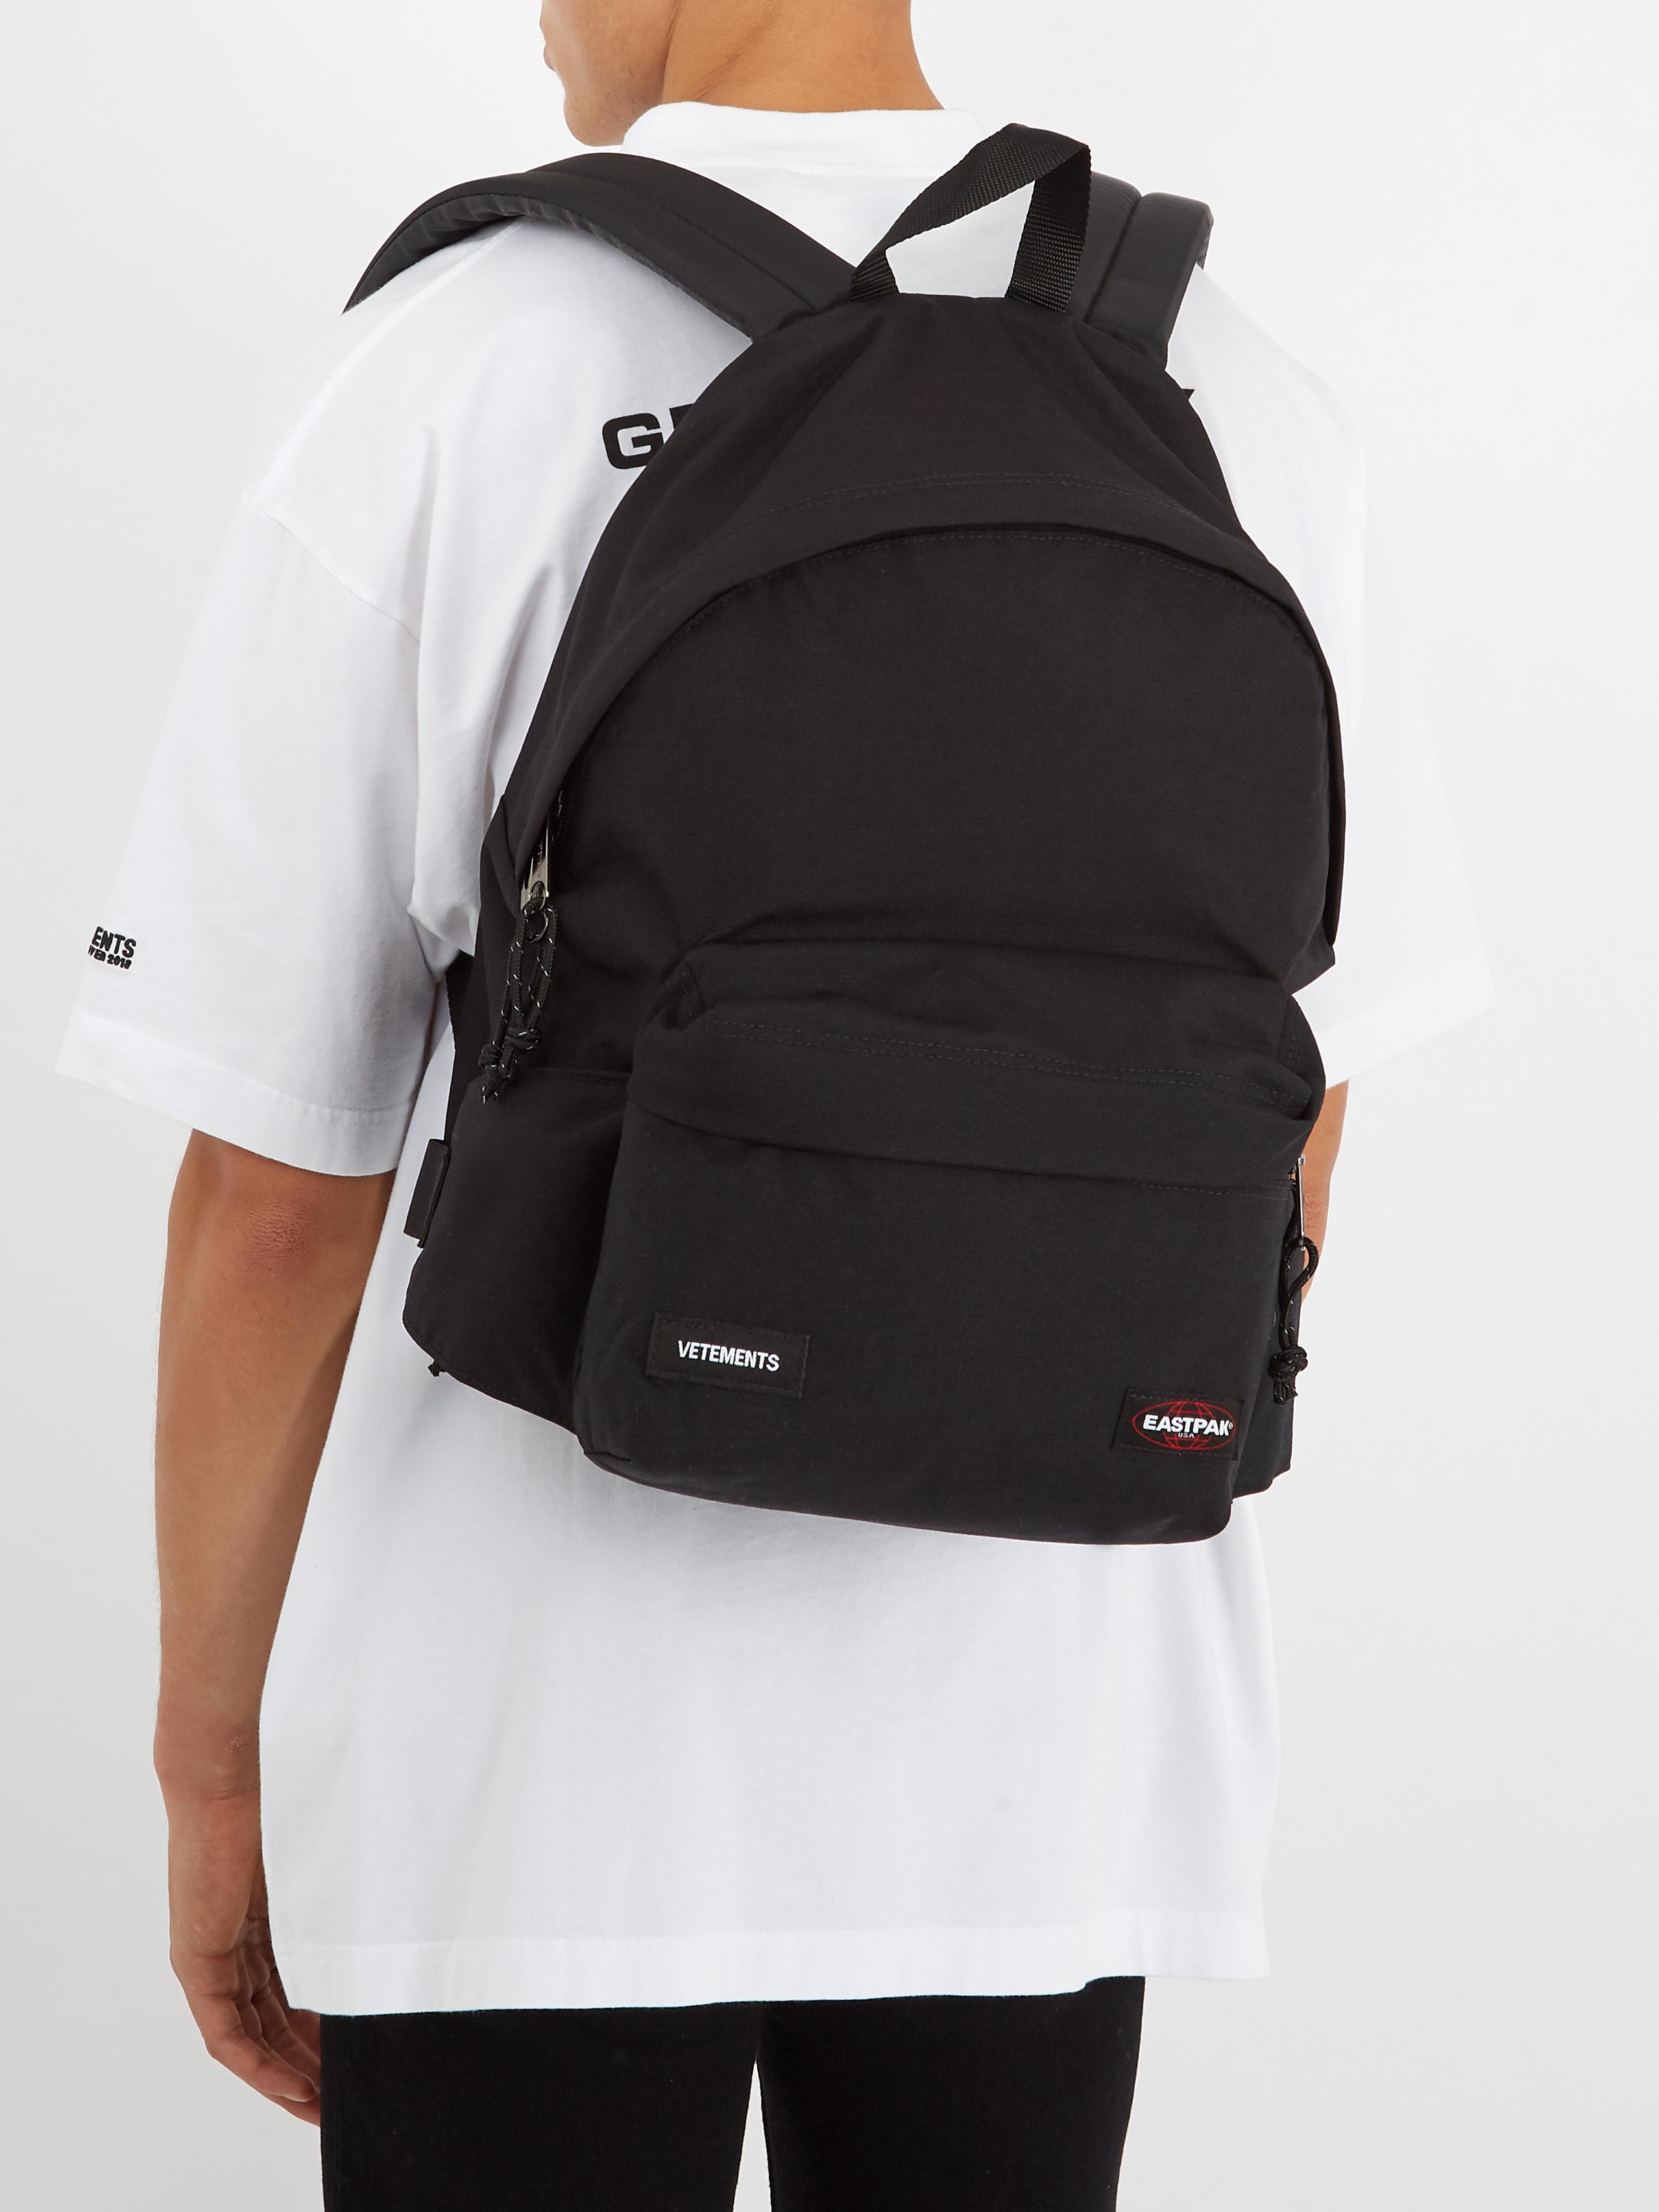 Vetements X Eastpak Backpack in Black for Men | Lyst